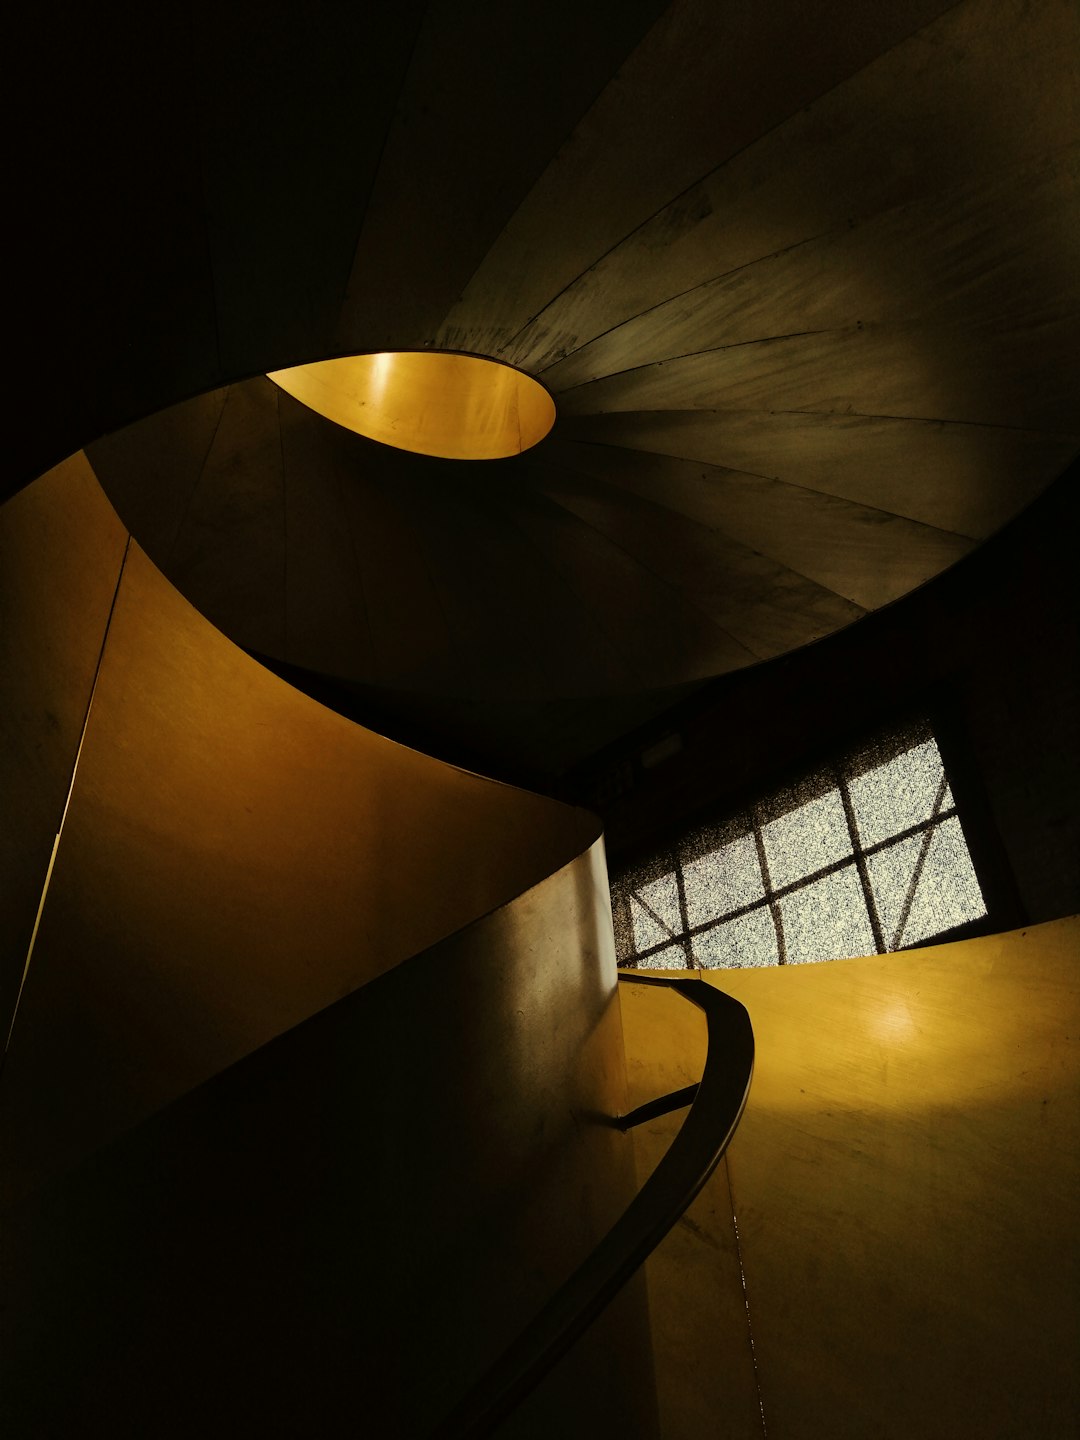 brown spiral staircase with black metal railings